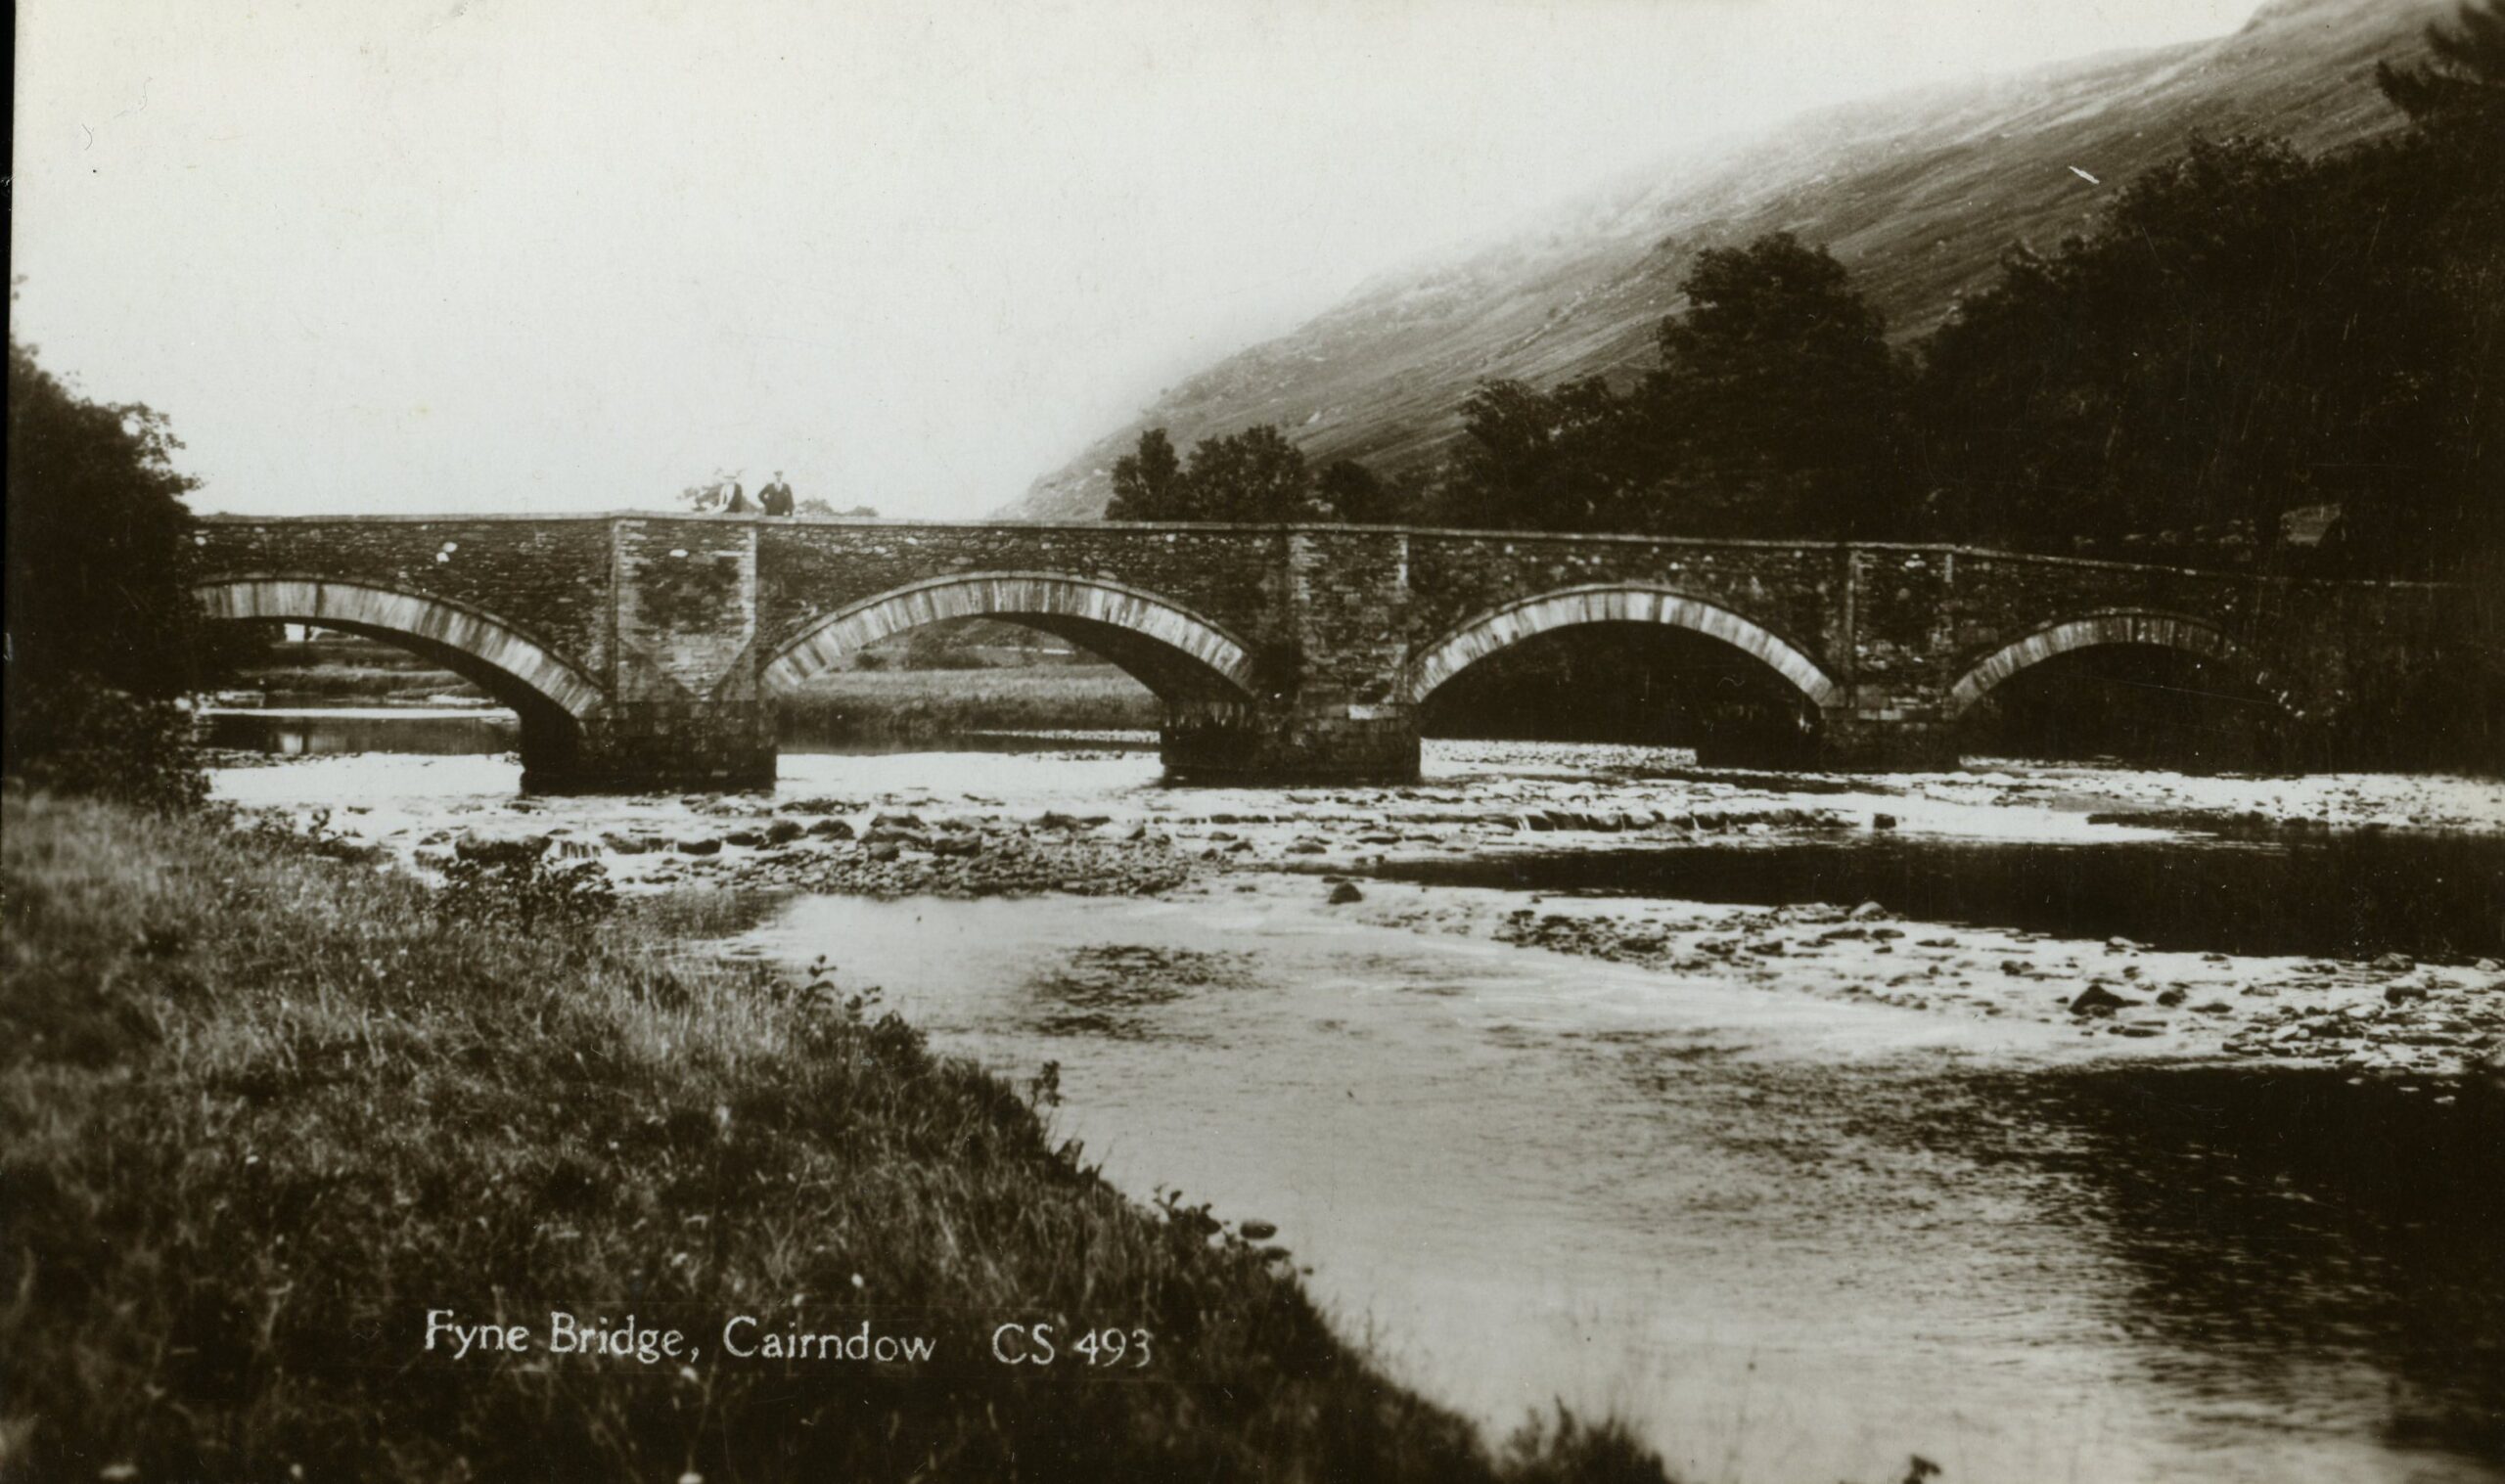 Fyne Bridge, Cairndow